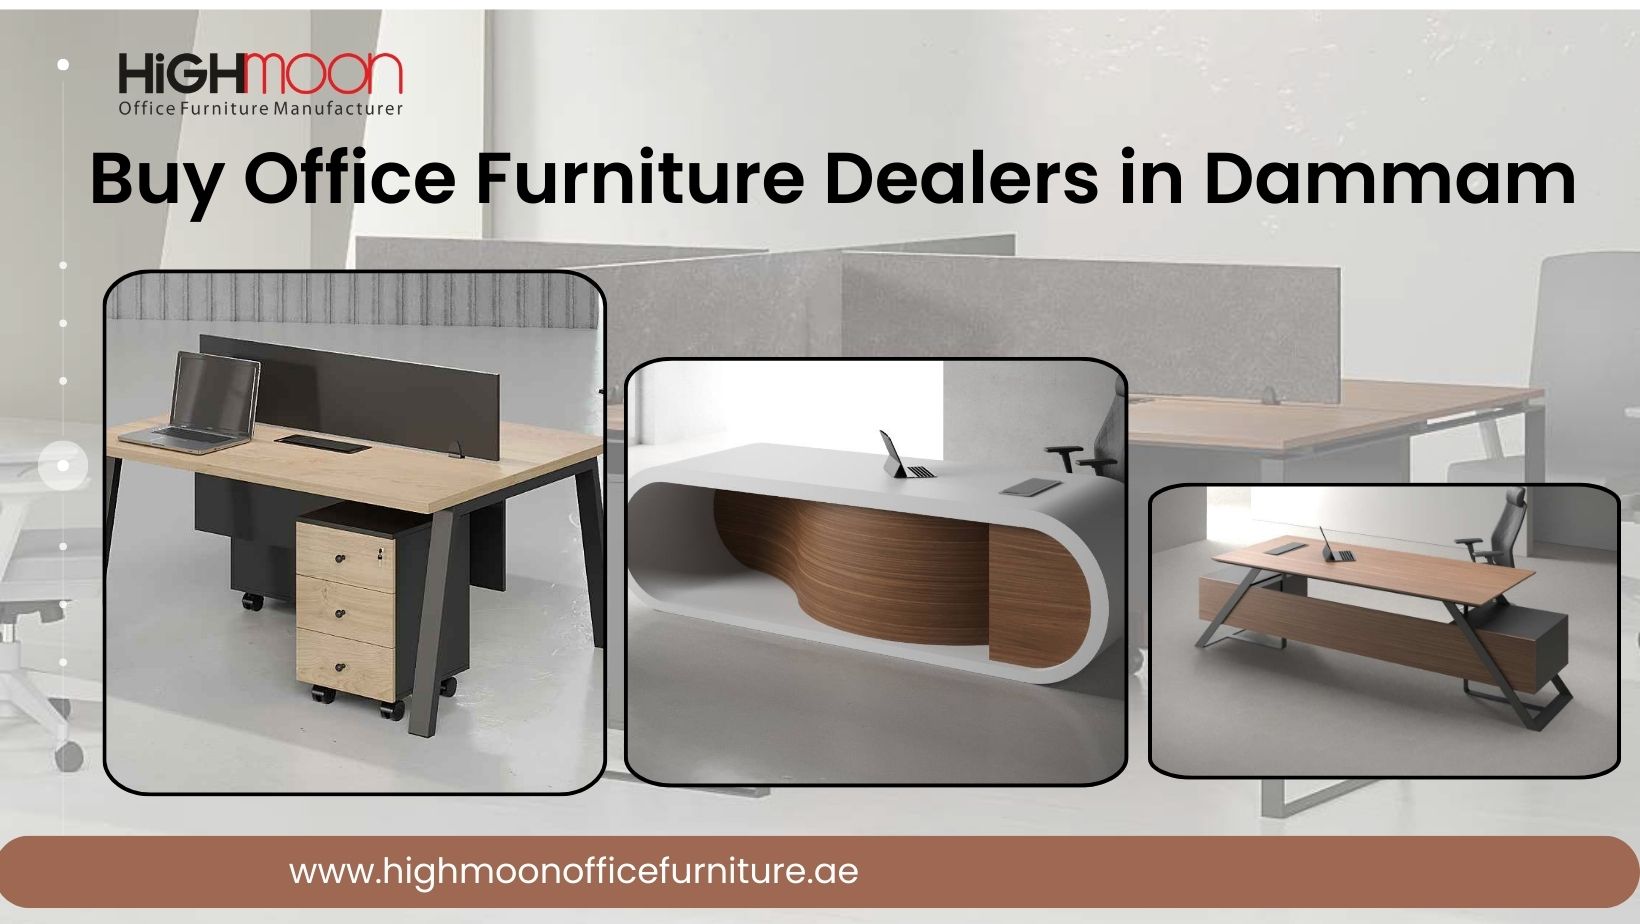 Buy Office Furniture Dealers in Dammam